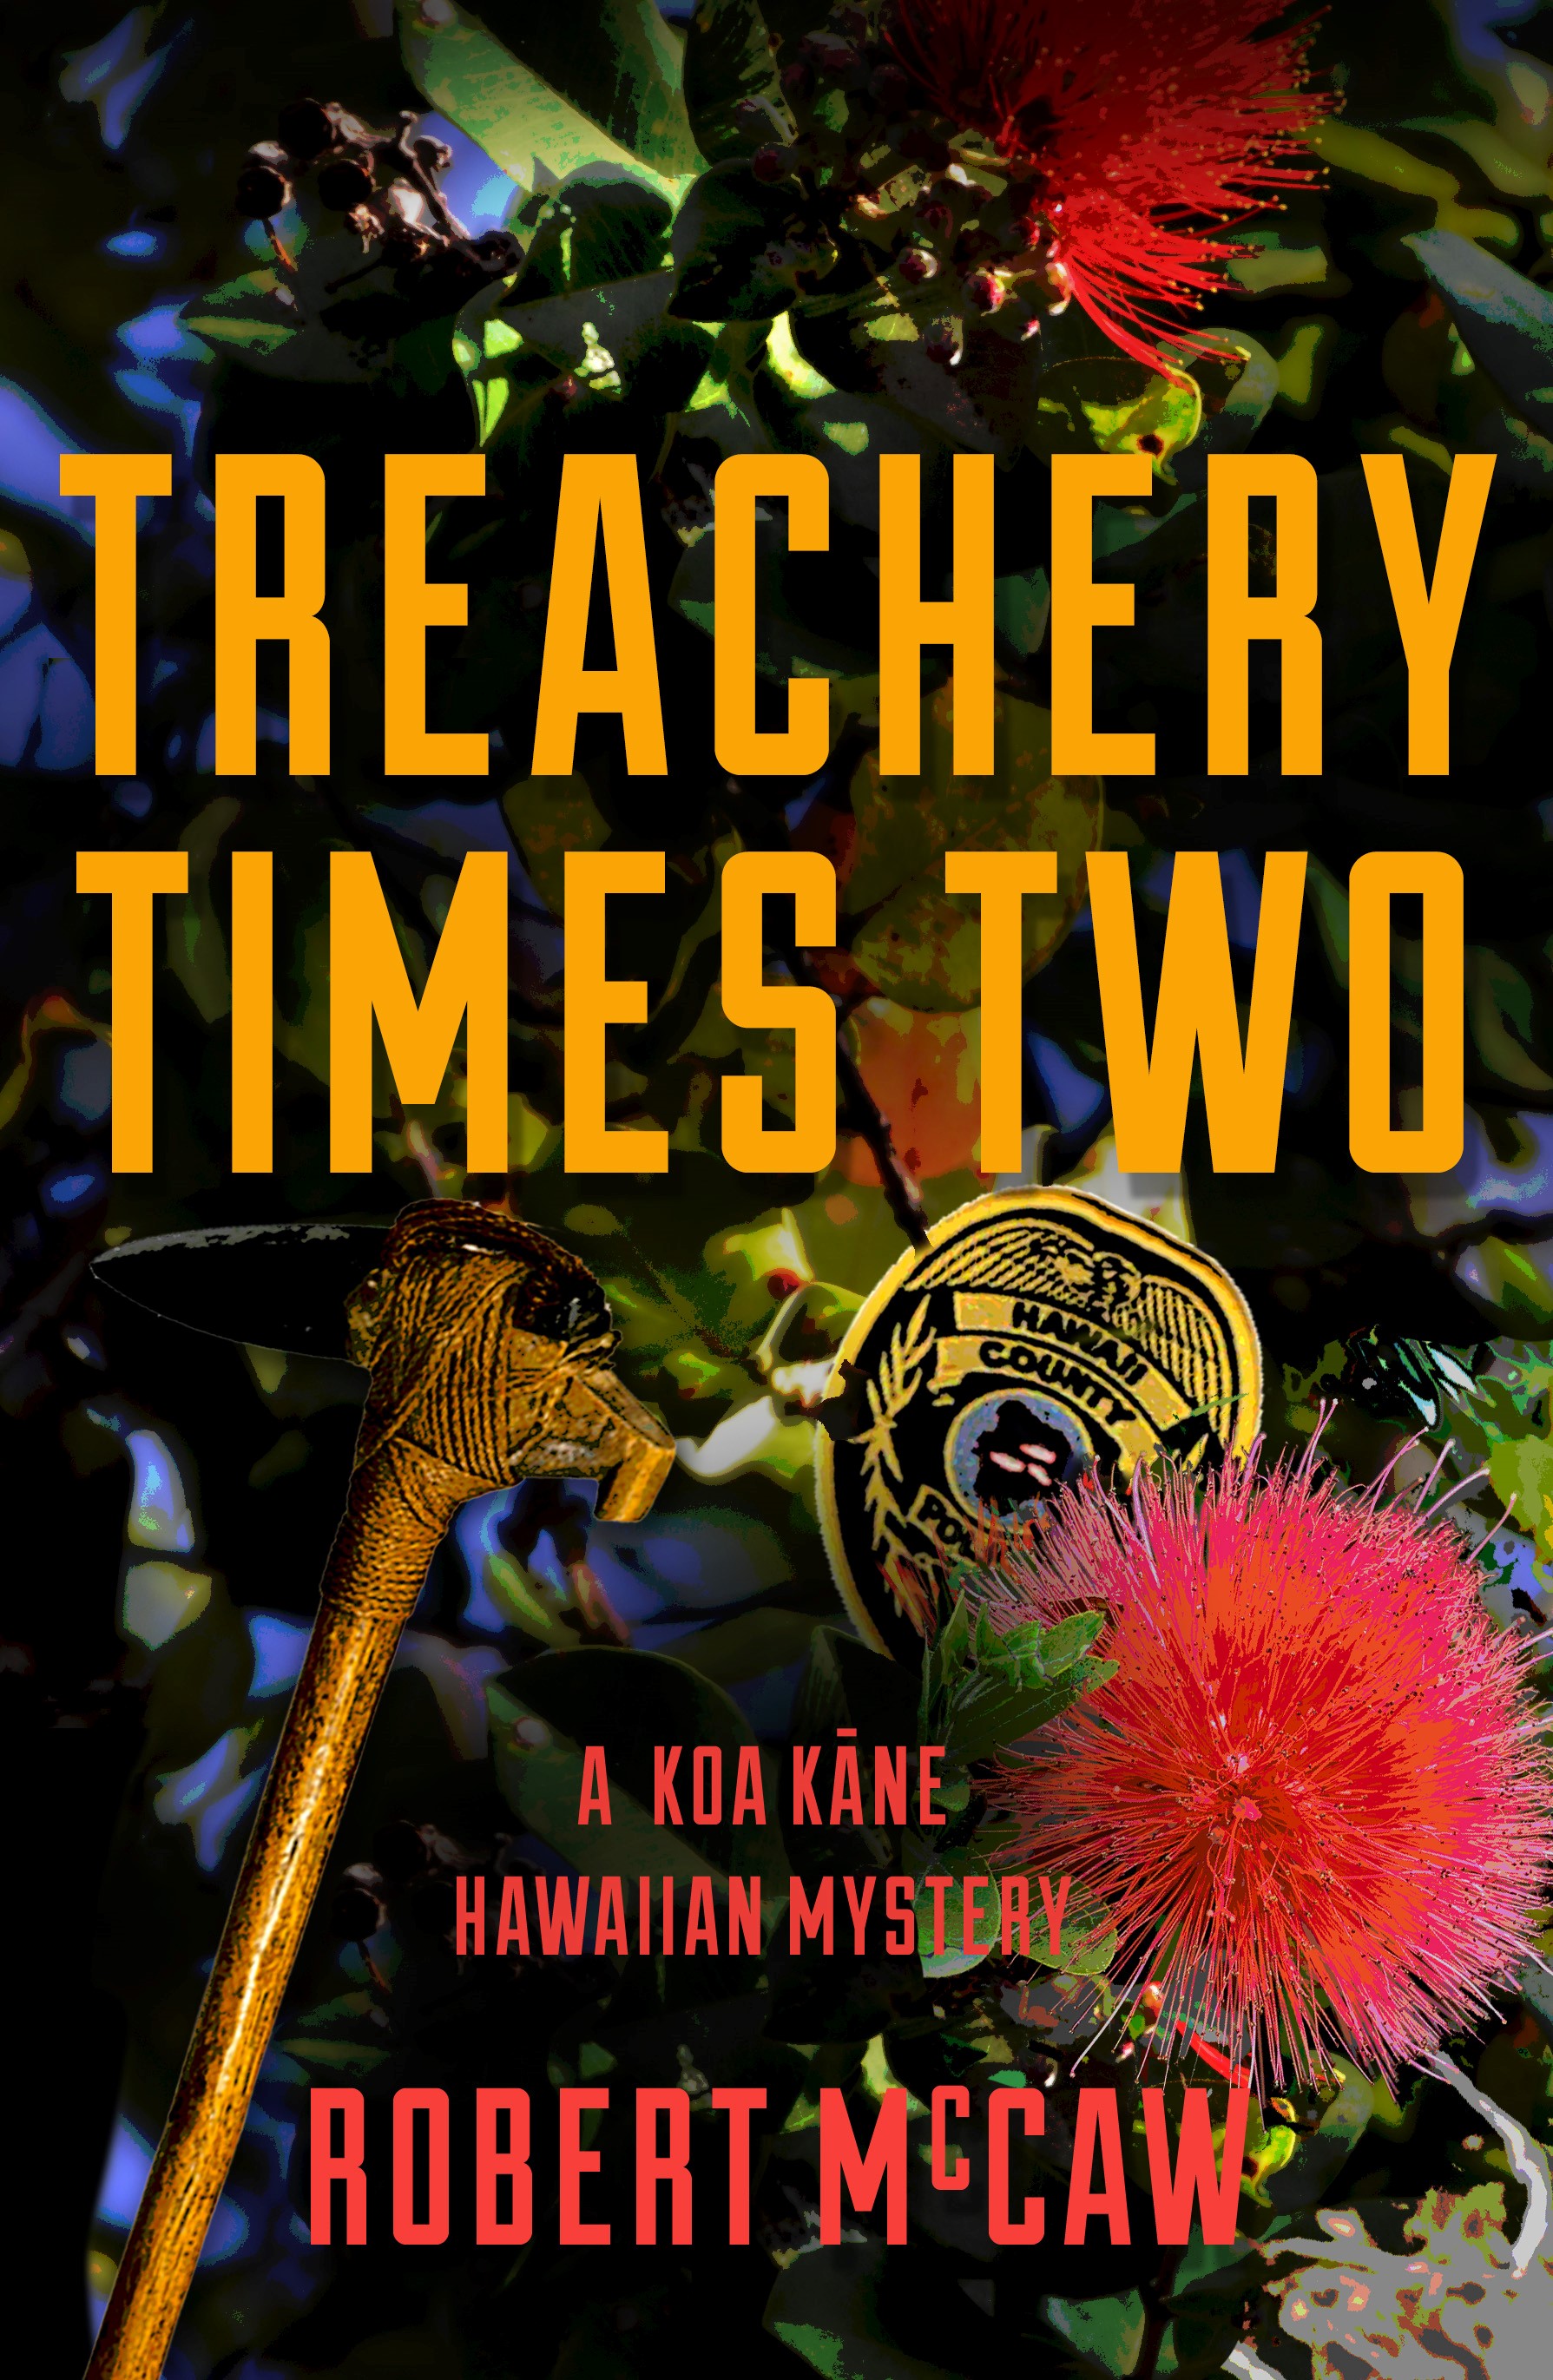 Treachery Times Two by Robert McCaw